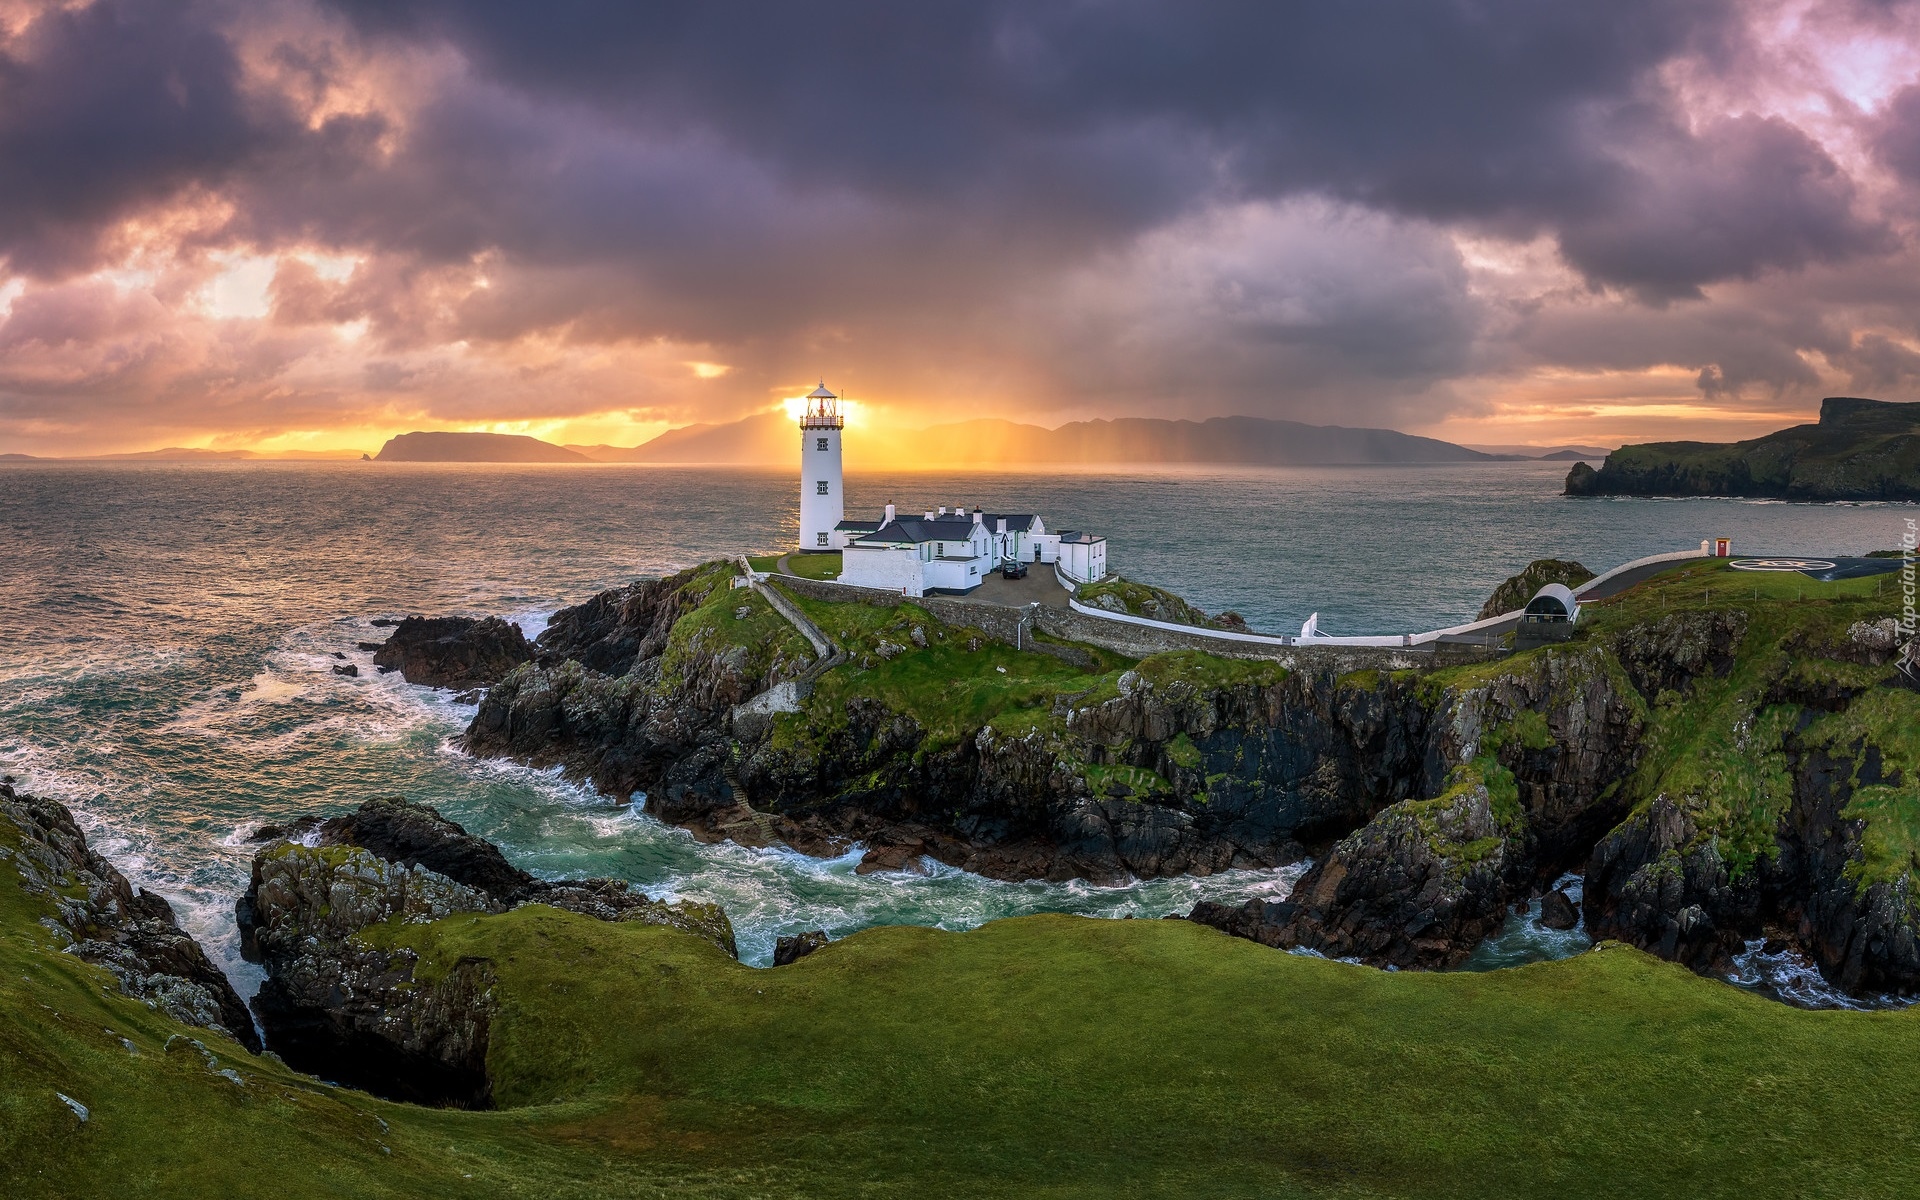 Morze, Latarnia morska, Fanad Head Lighthouse, Skały, Chmury, Zachód słońca, Portsalon, Irlandia